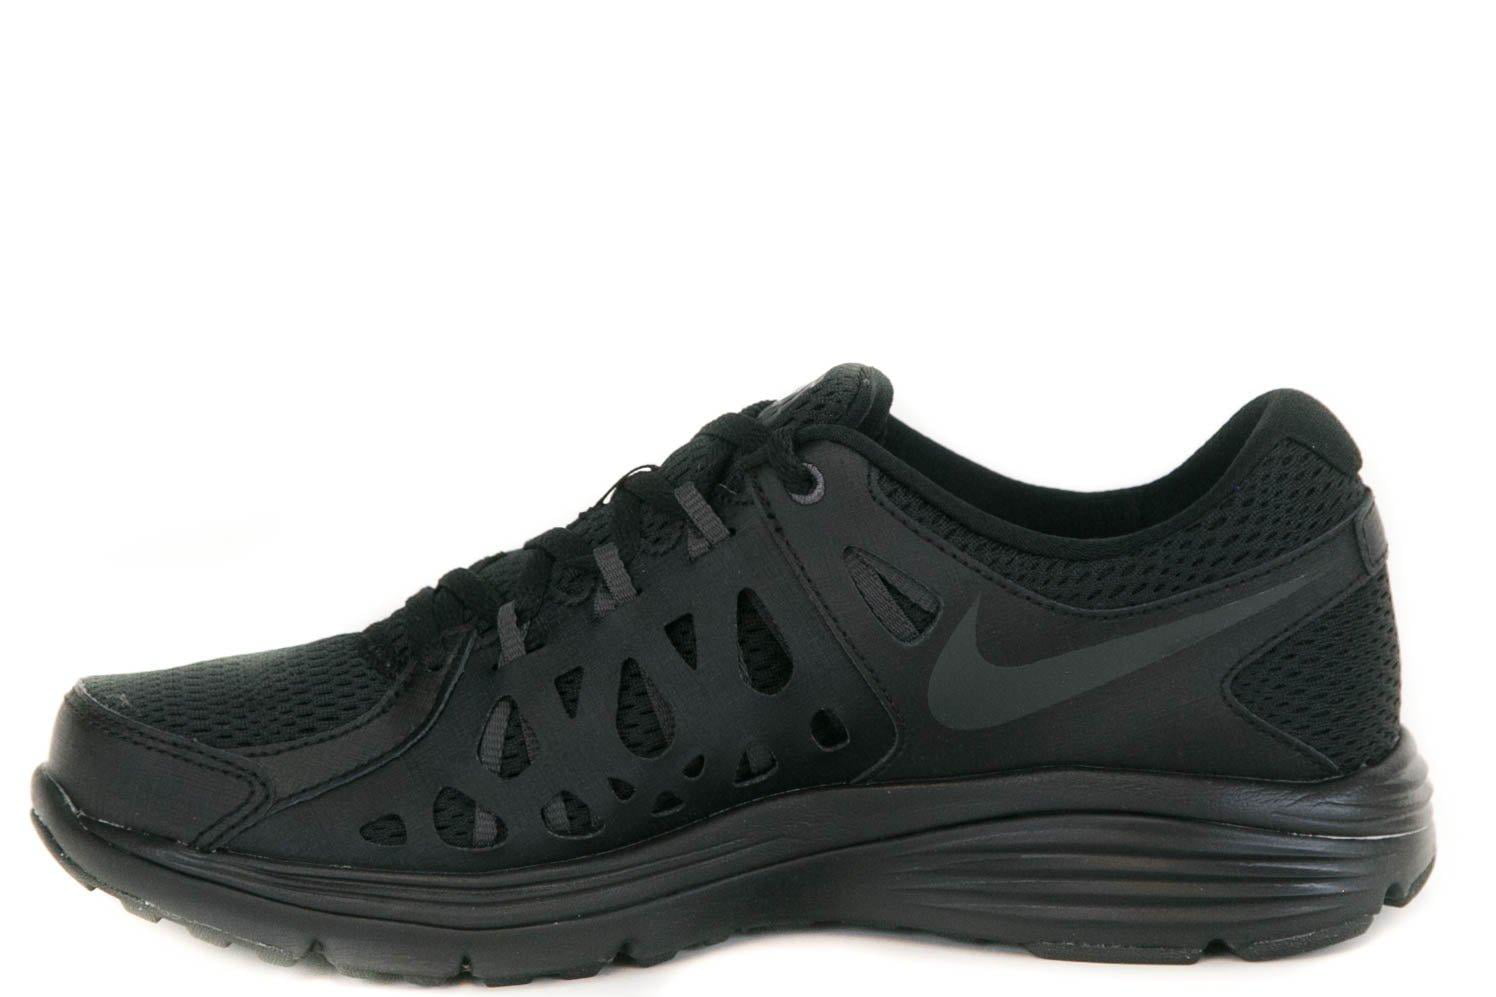 Nike Mens Dual Black/Anthracite Running Shoes - Walmart.com